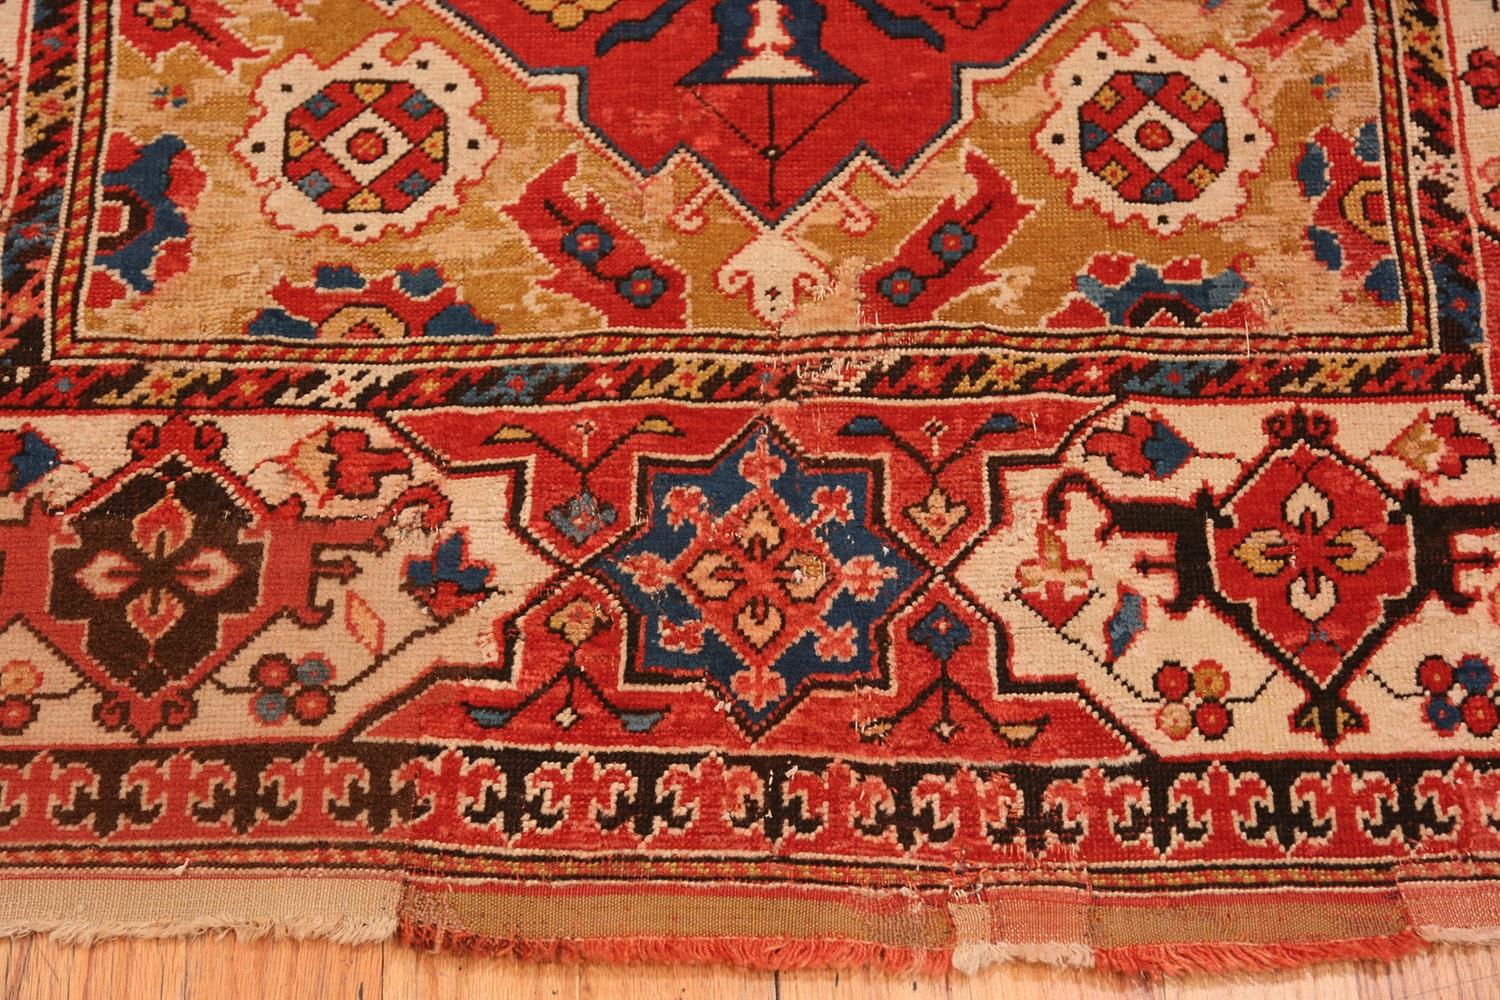 Beautiful antique 17th century Transylvanian rug, country of origin: Romania (Ottoman Empire), date circa second half of 17th century. Size: 3 ft 9 in x 5 ft 8 in (1.14 m x 1.73 m).